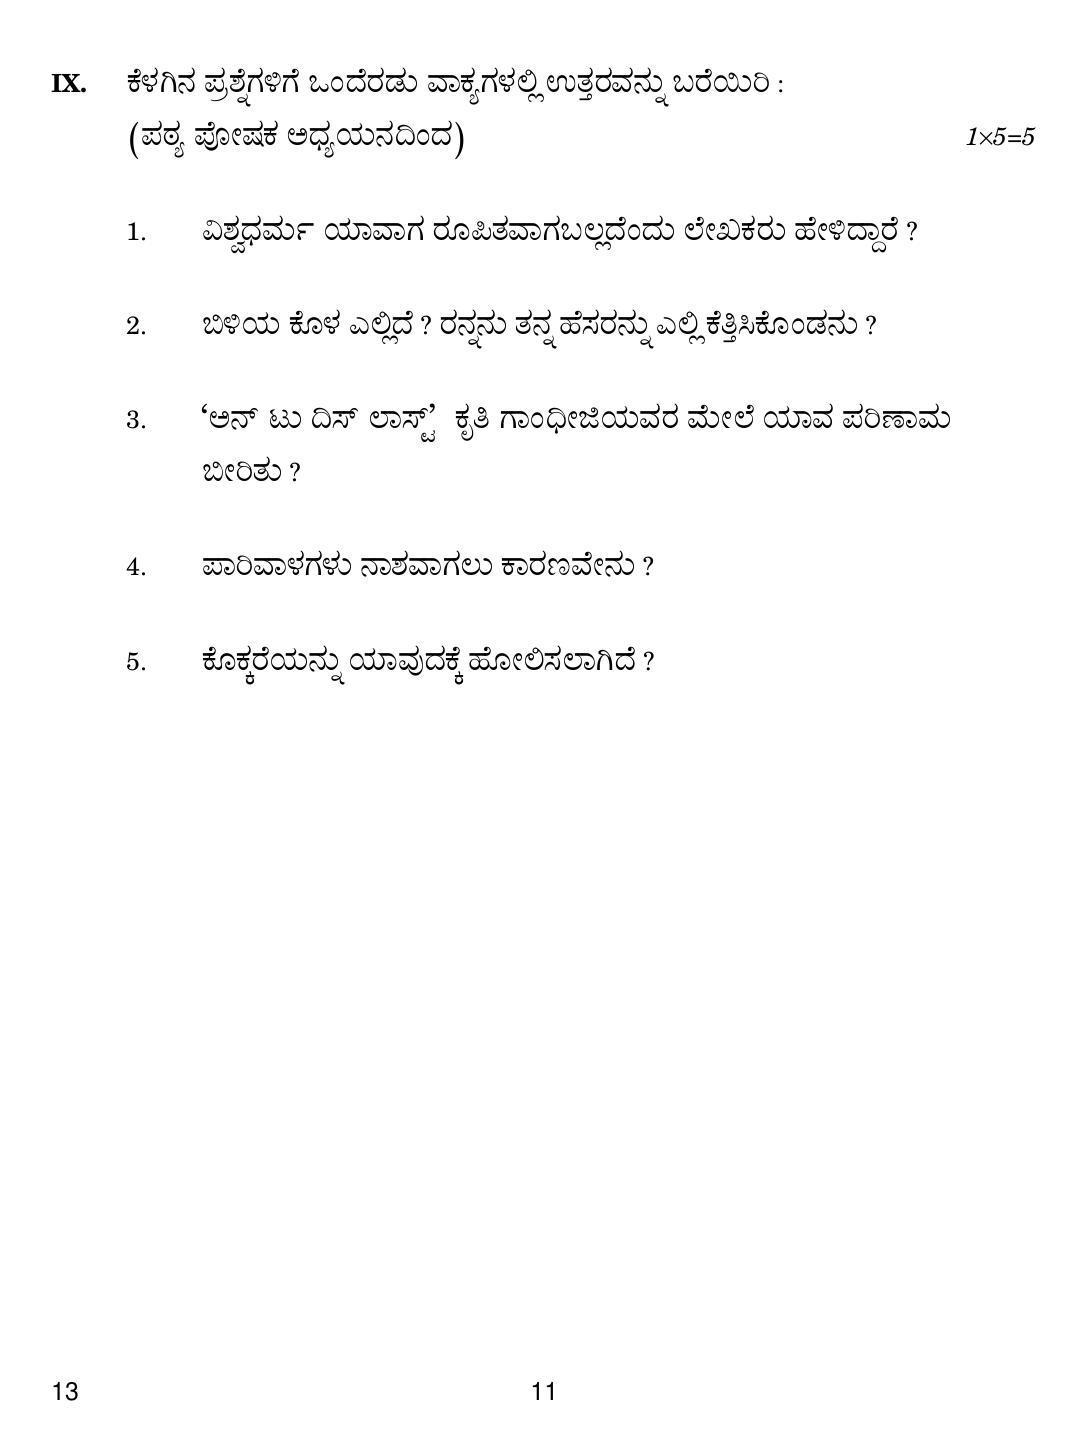 CBSE Class 10 13 Kannada 2019 Question Paper - Page 11